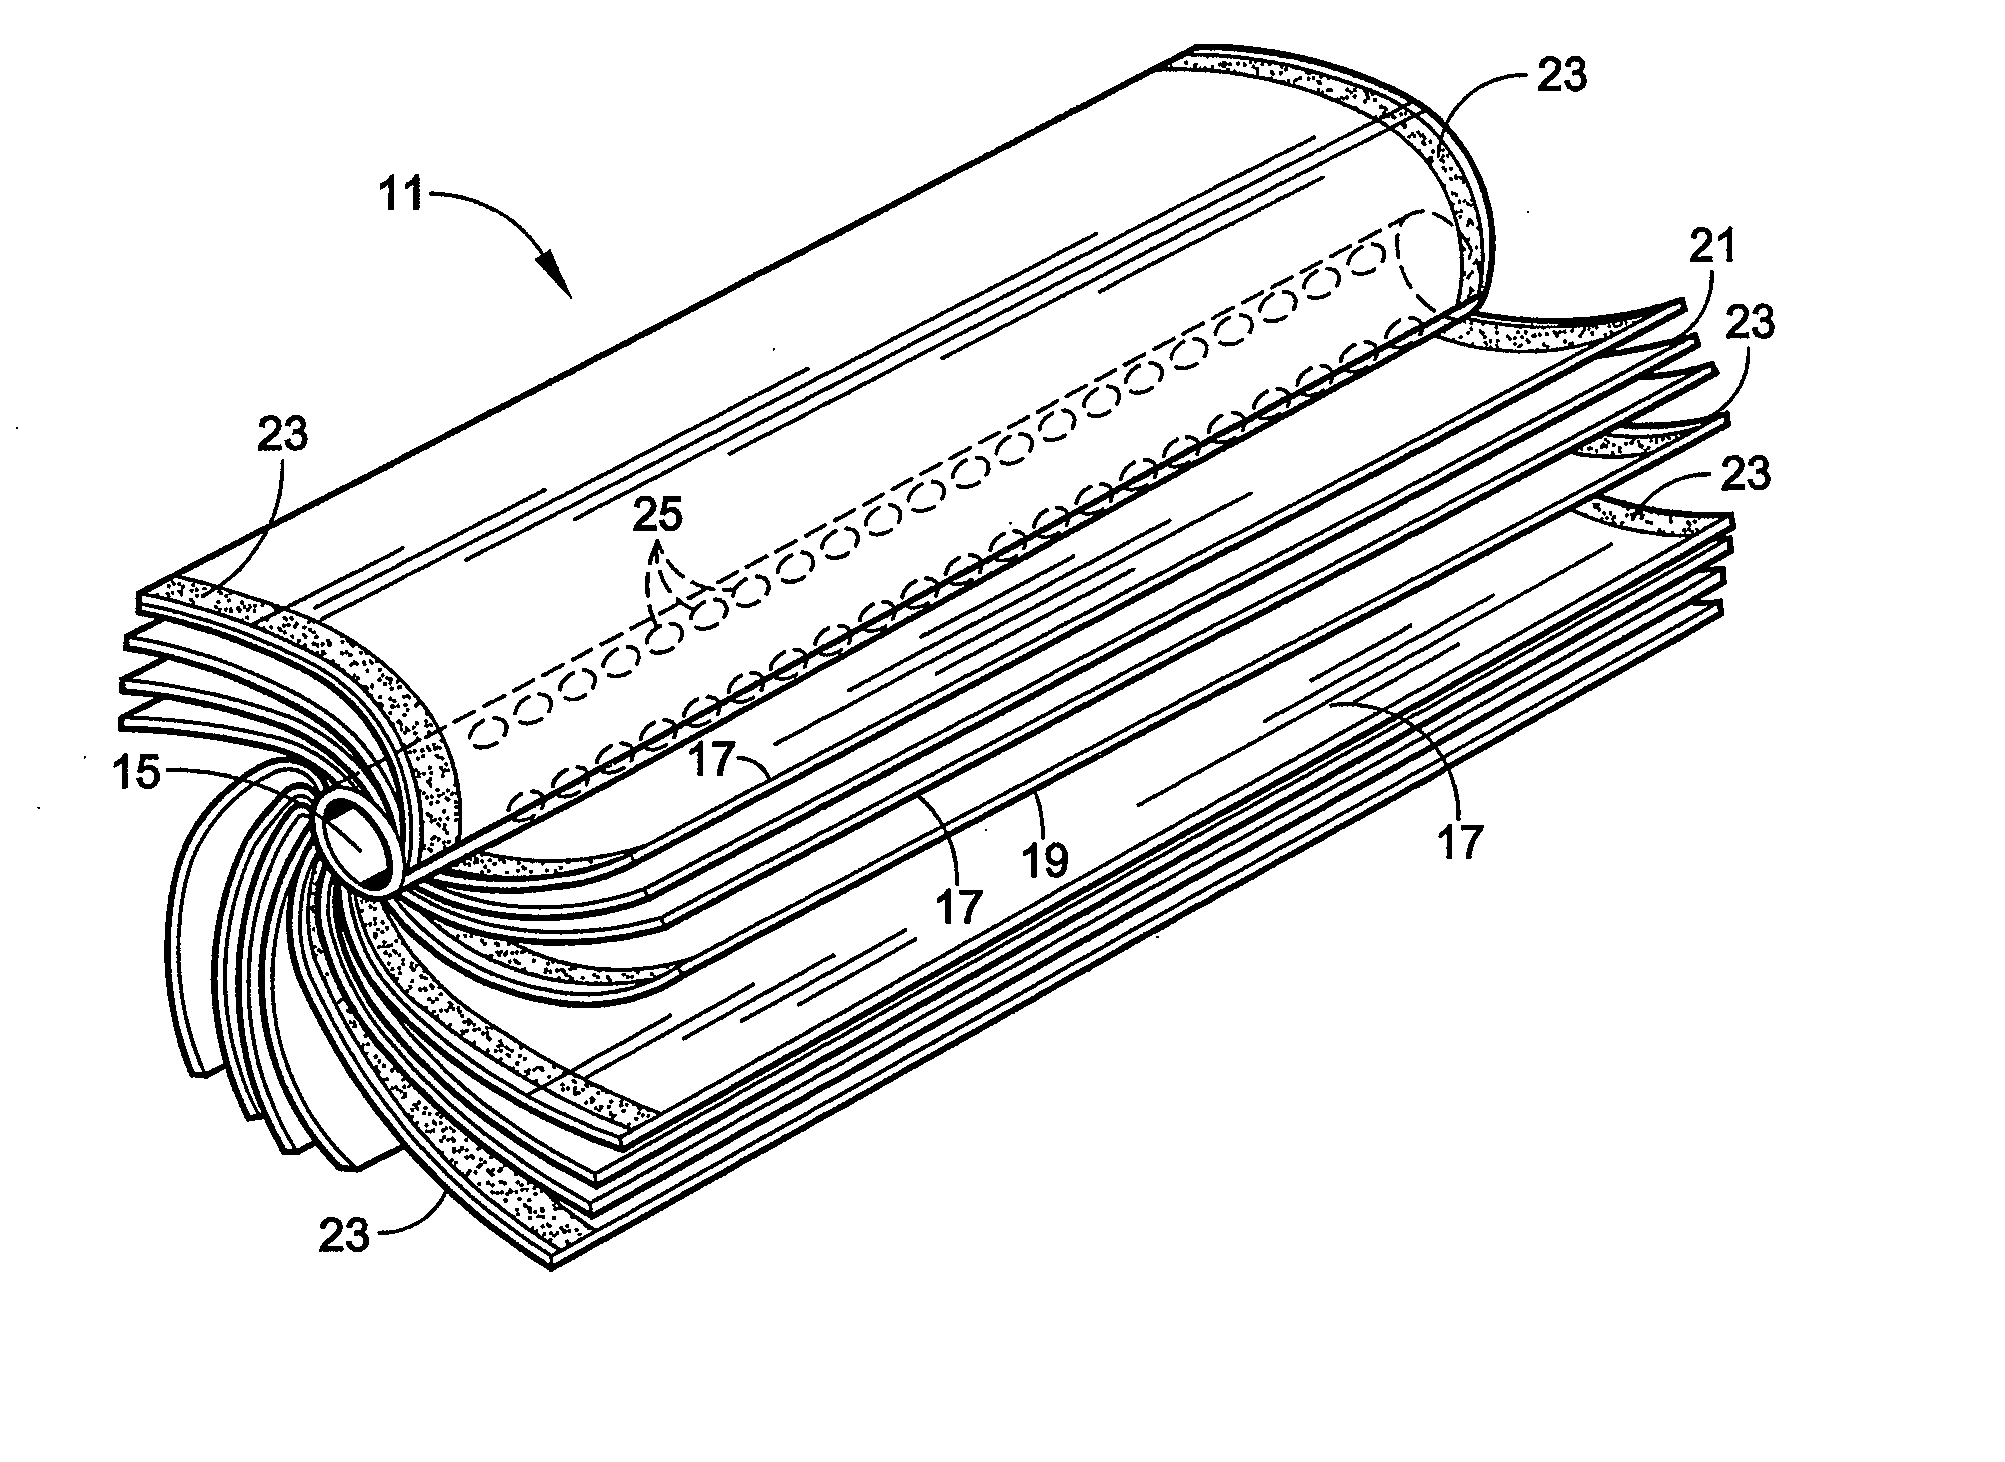 High-density filtration module